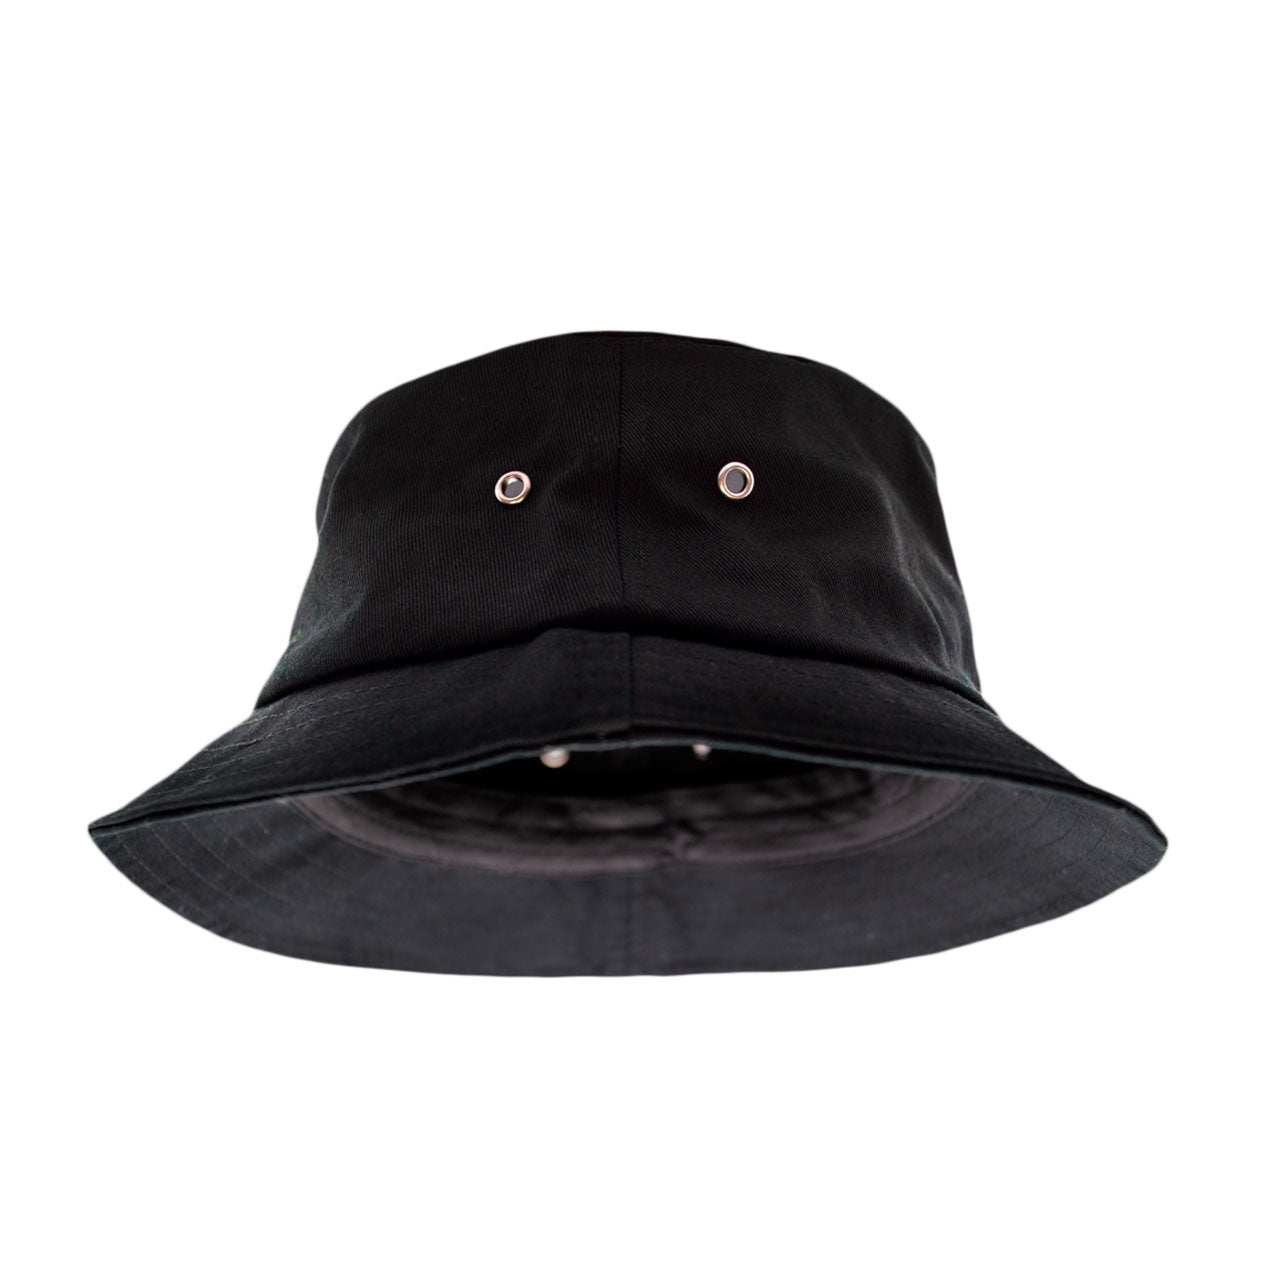 Skeppy Derp Face Bucket Hat